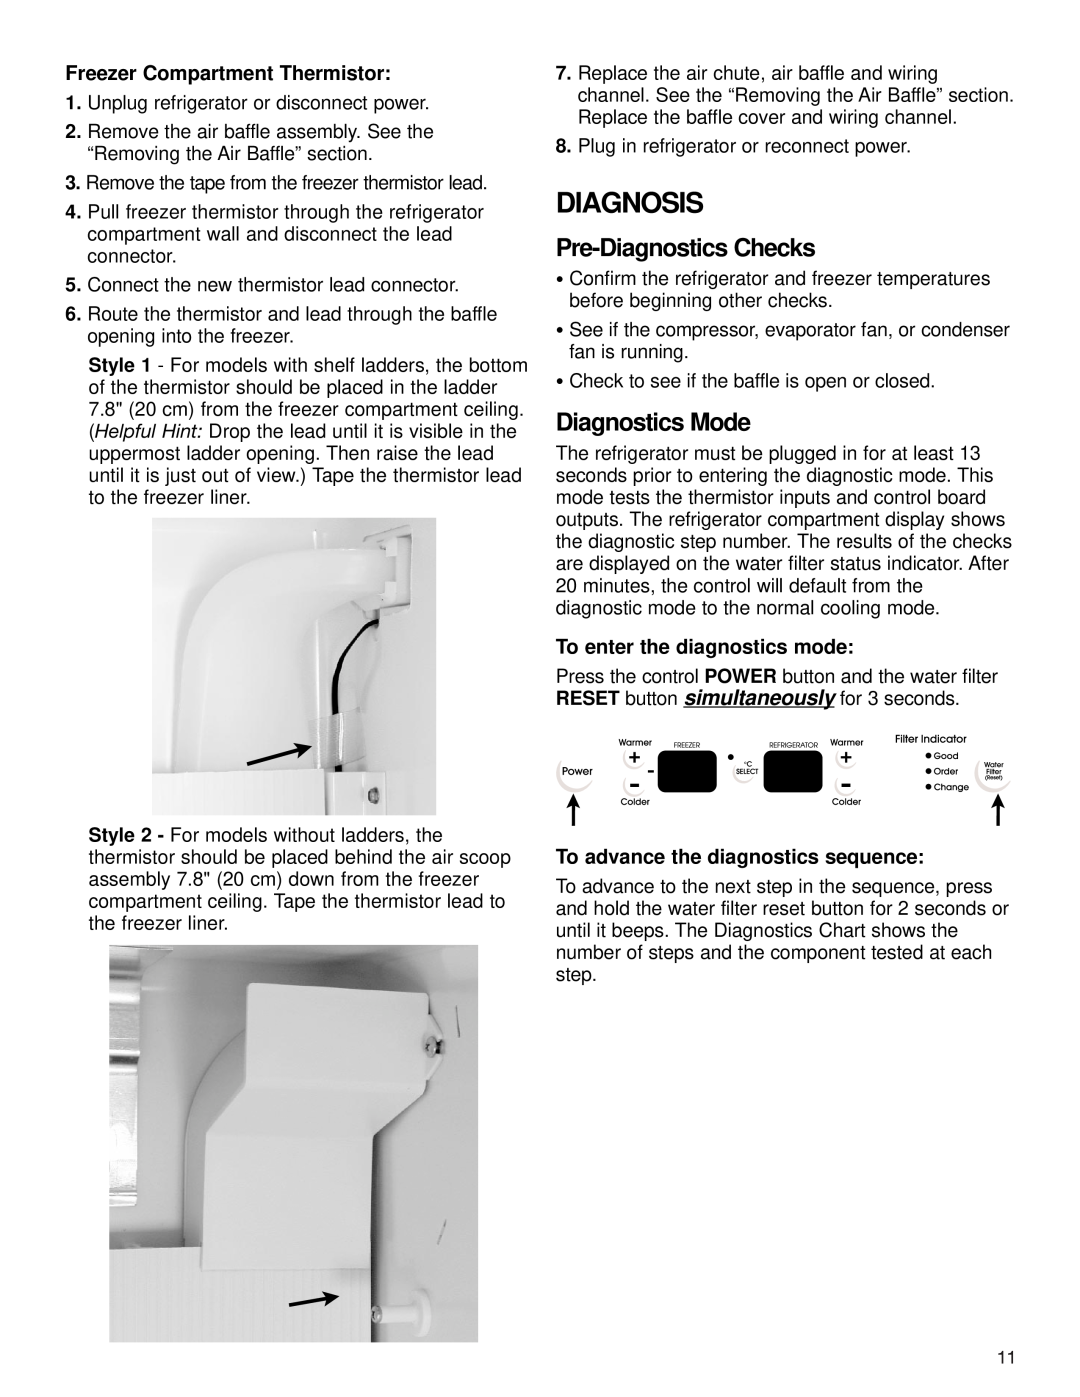 KitchenAid KSRA22FK manual Diagnosis, Pre-Diagnostics Checks, Diagnostics Mode, Freezer Compartment Thermistor 